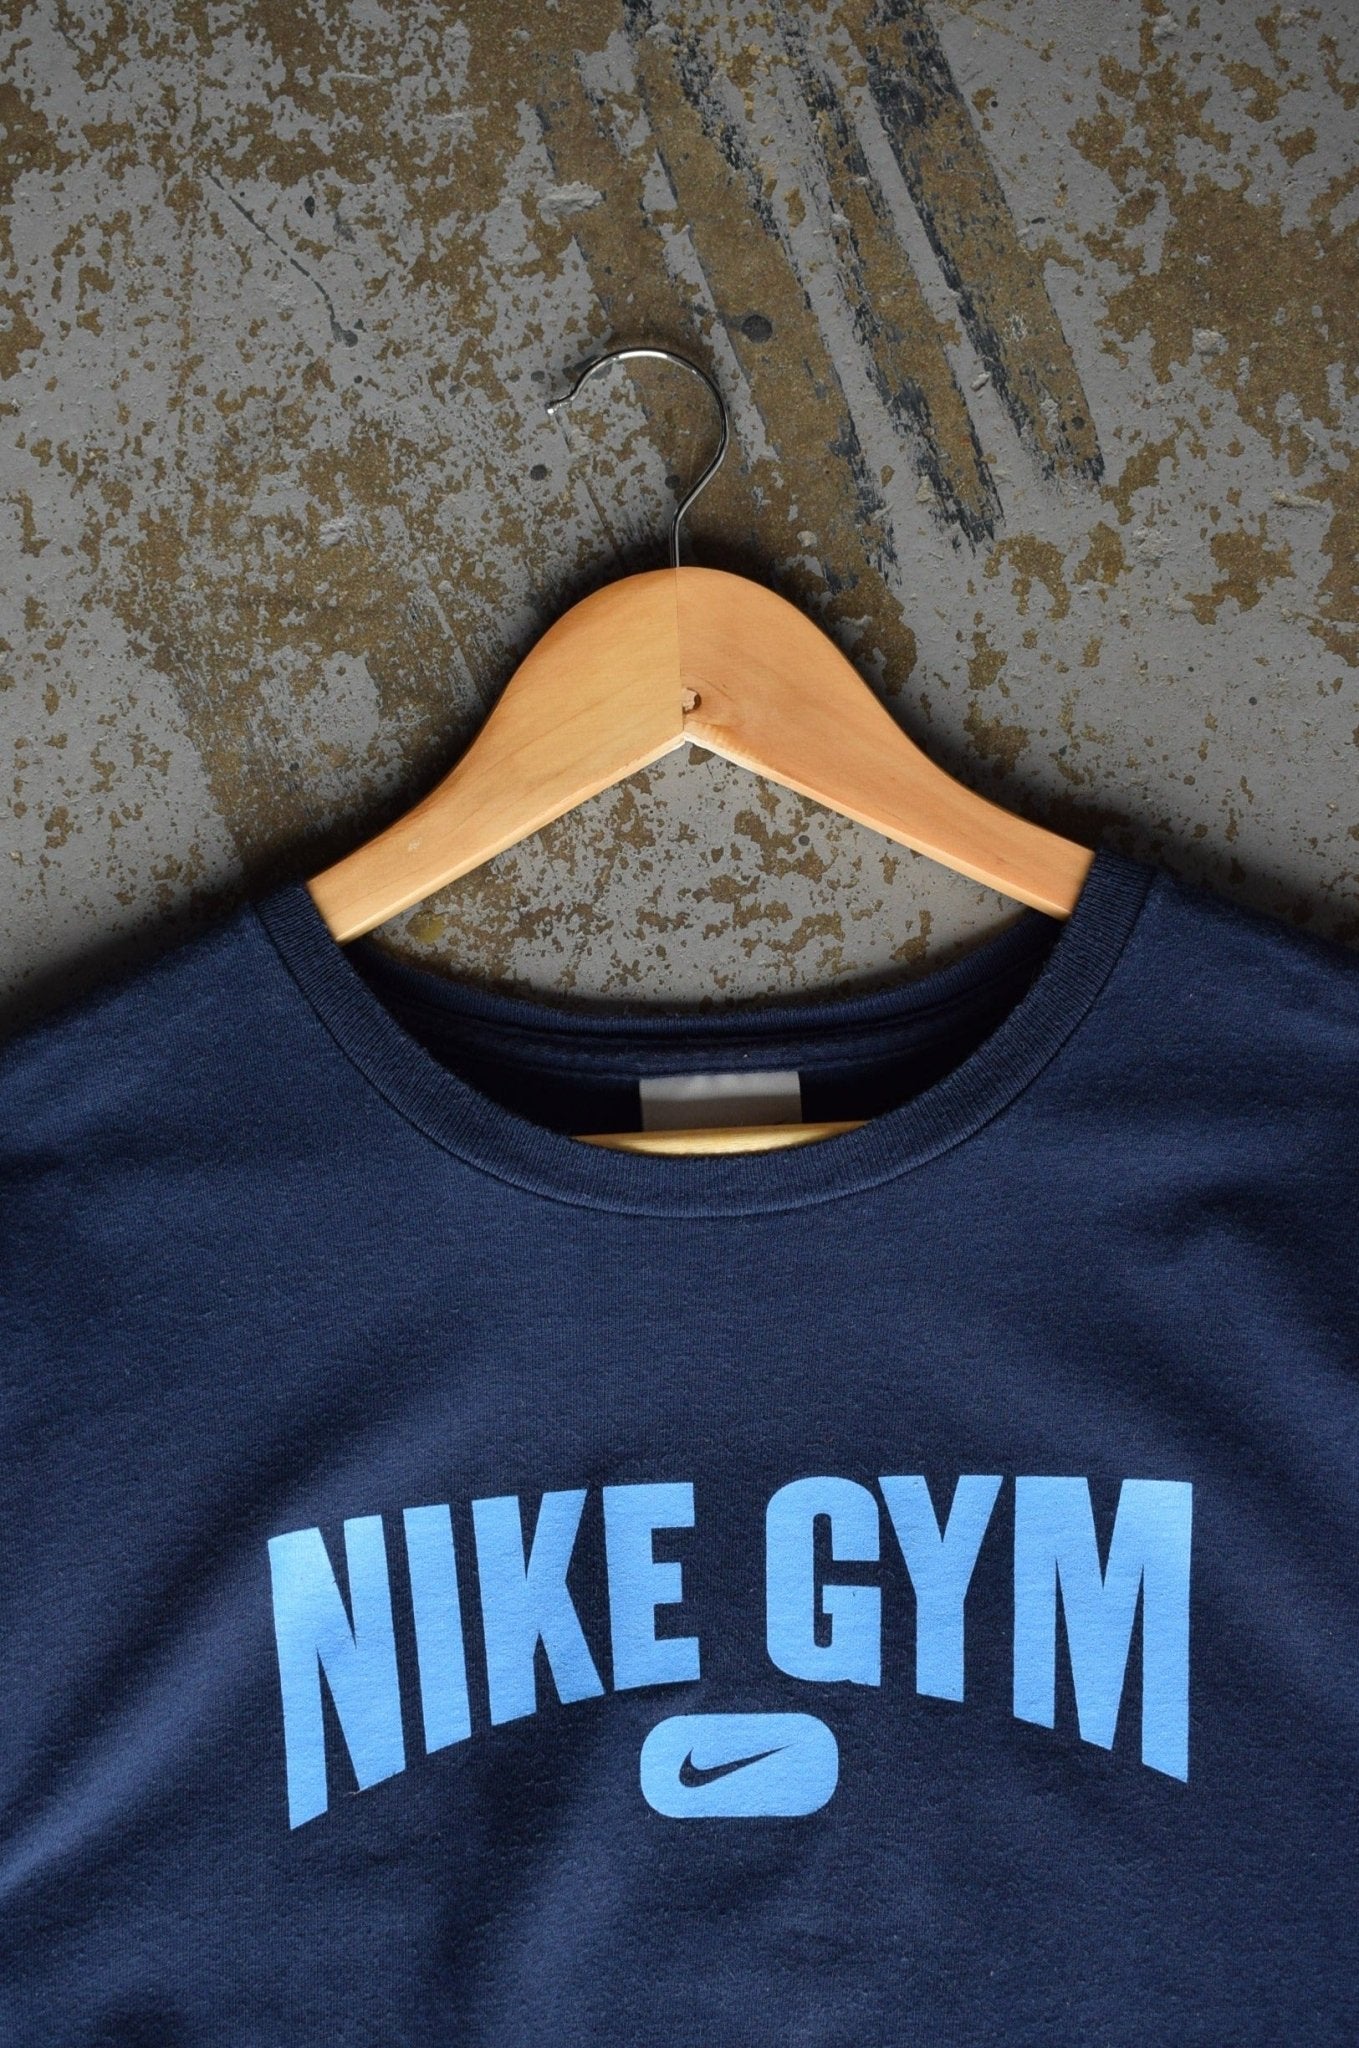 Vintage Nike Gym Tee (M) - Retrospective Store